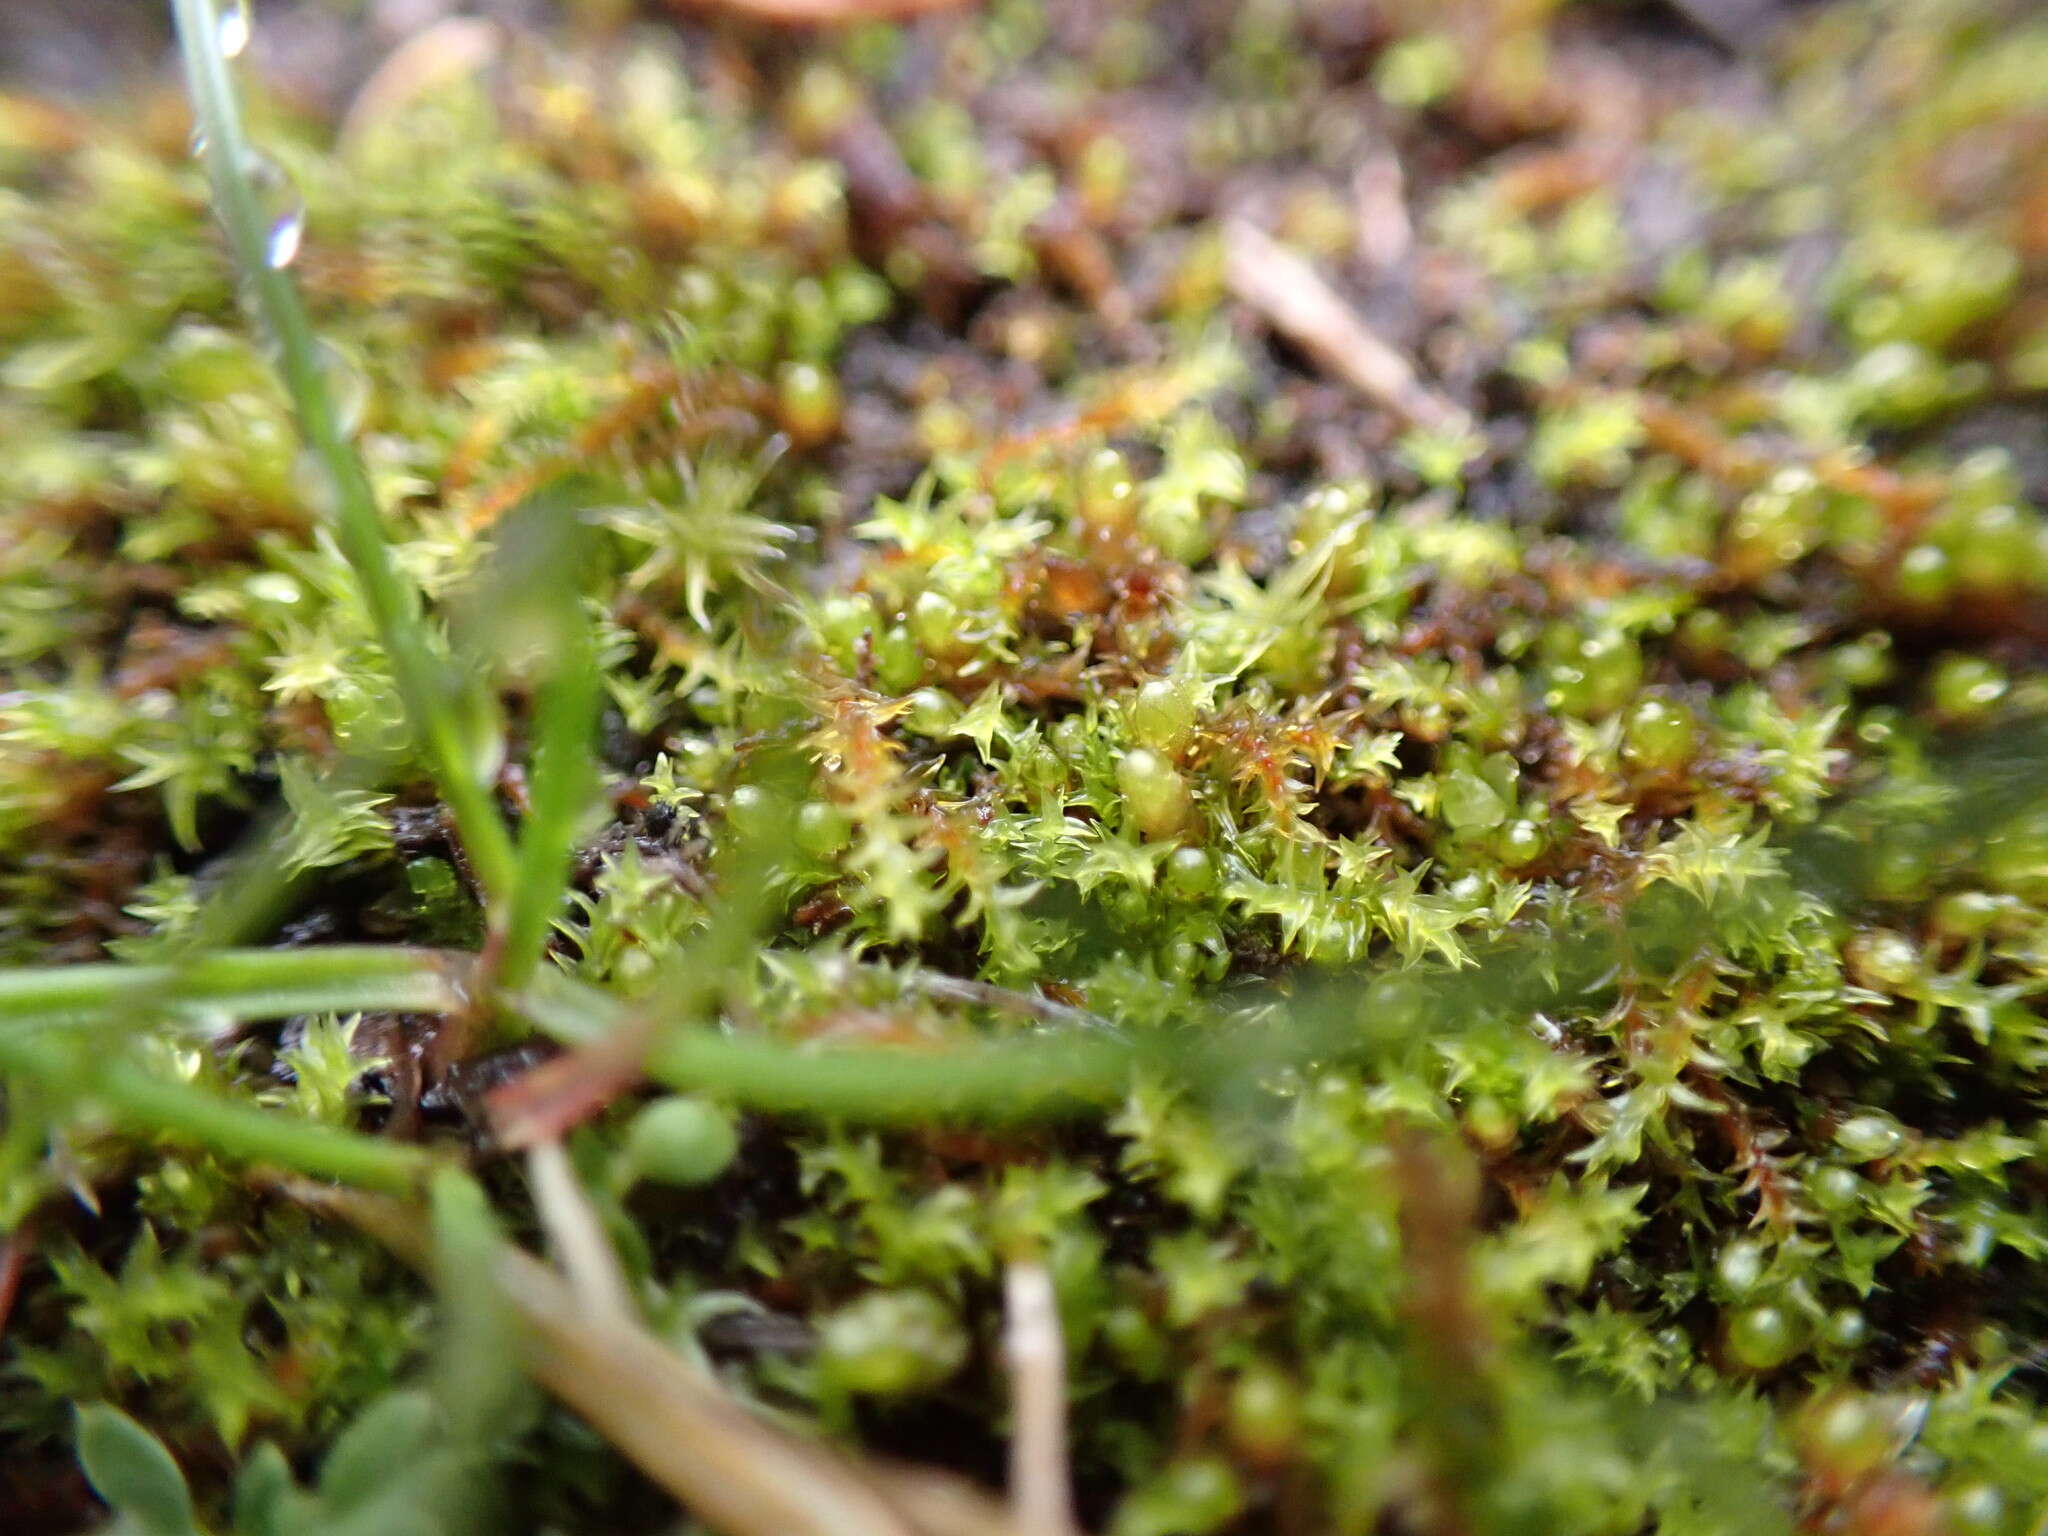 Image of California triquetrella moss